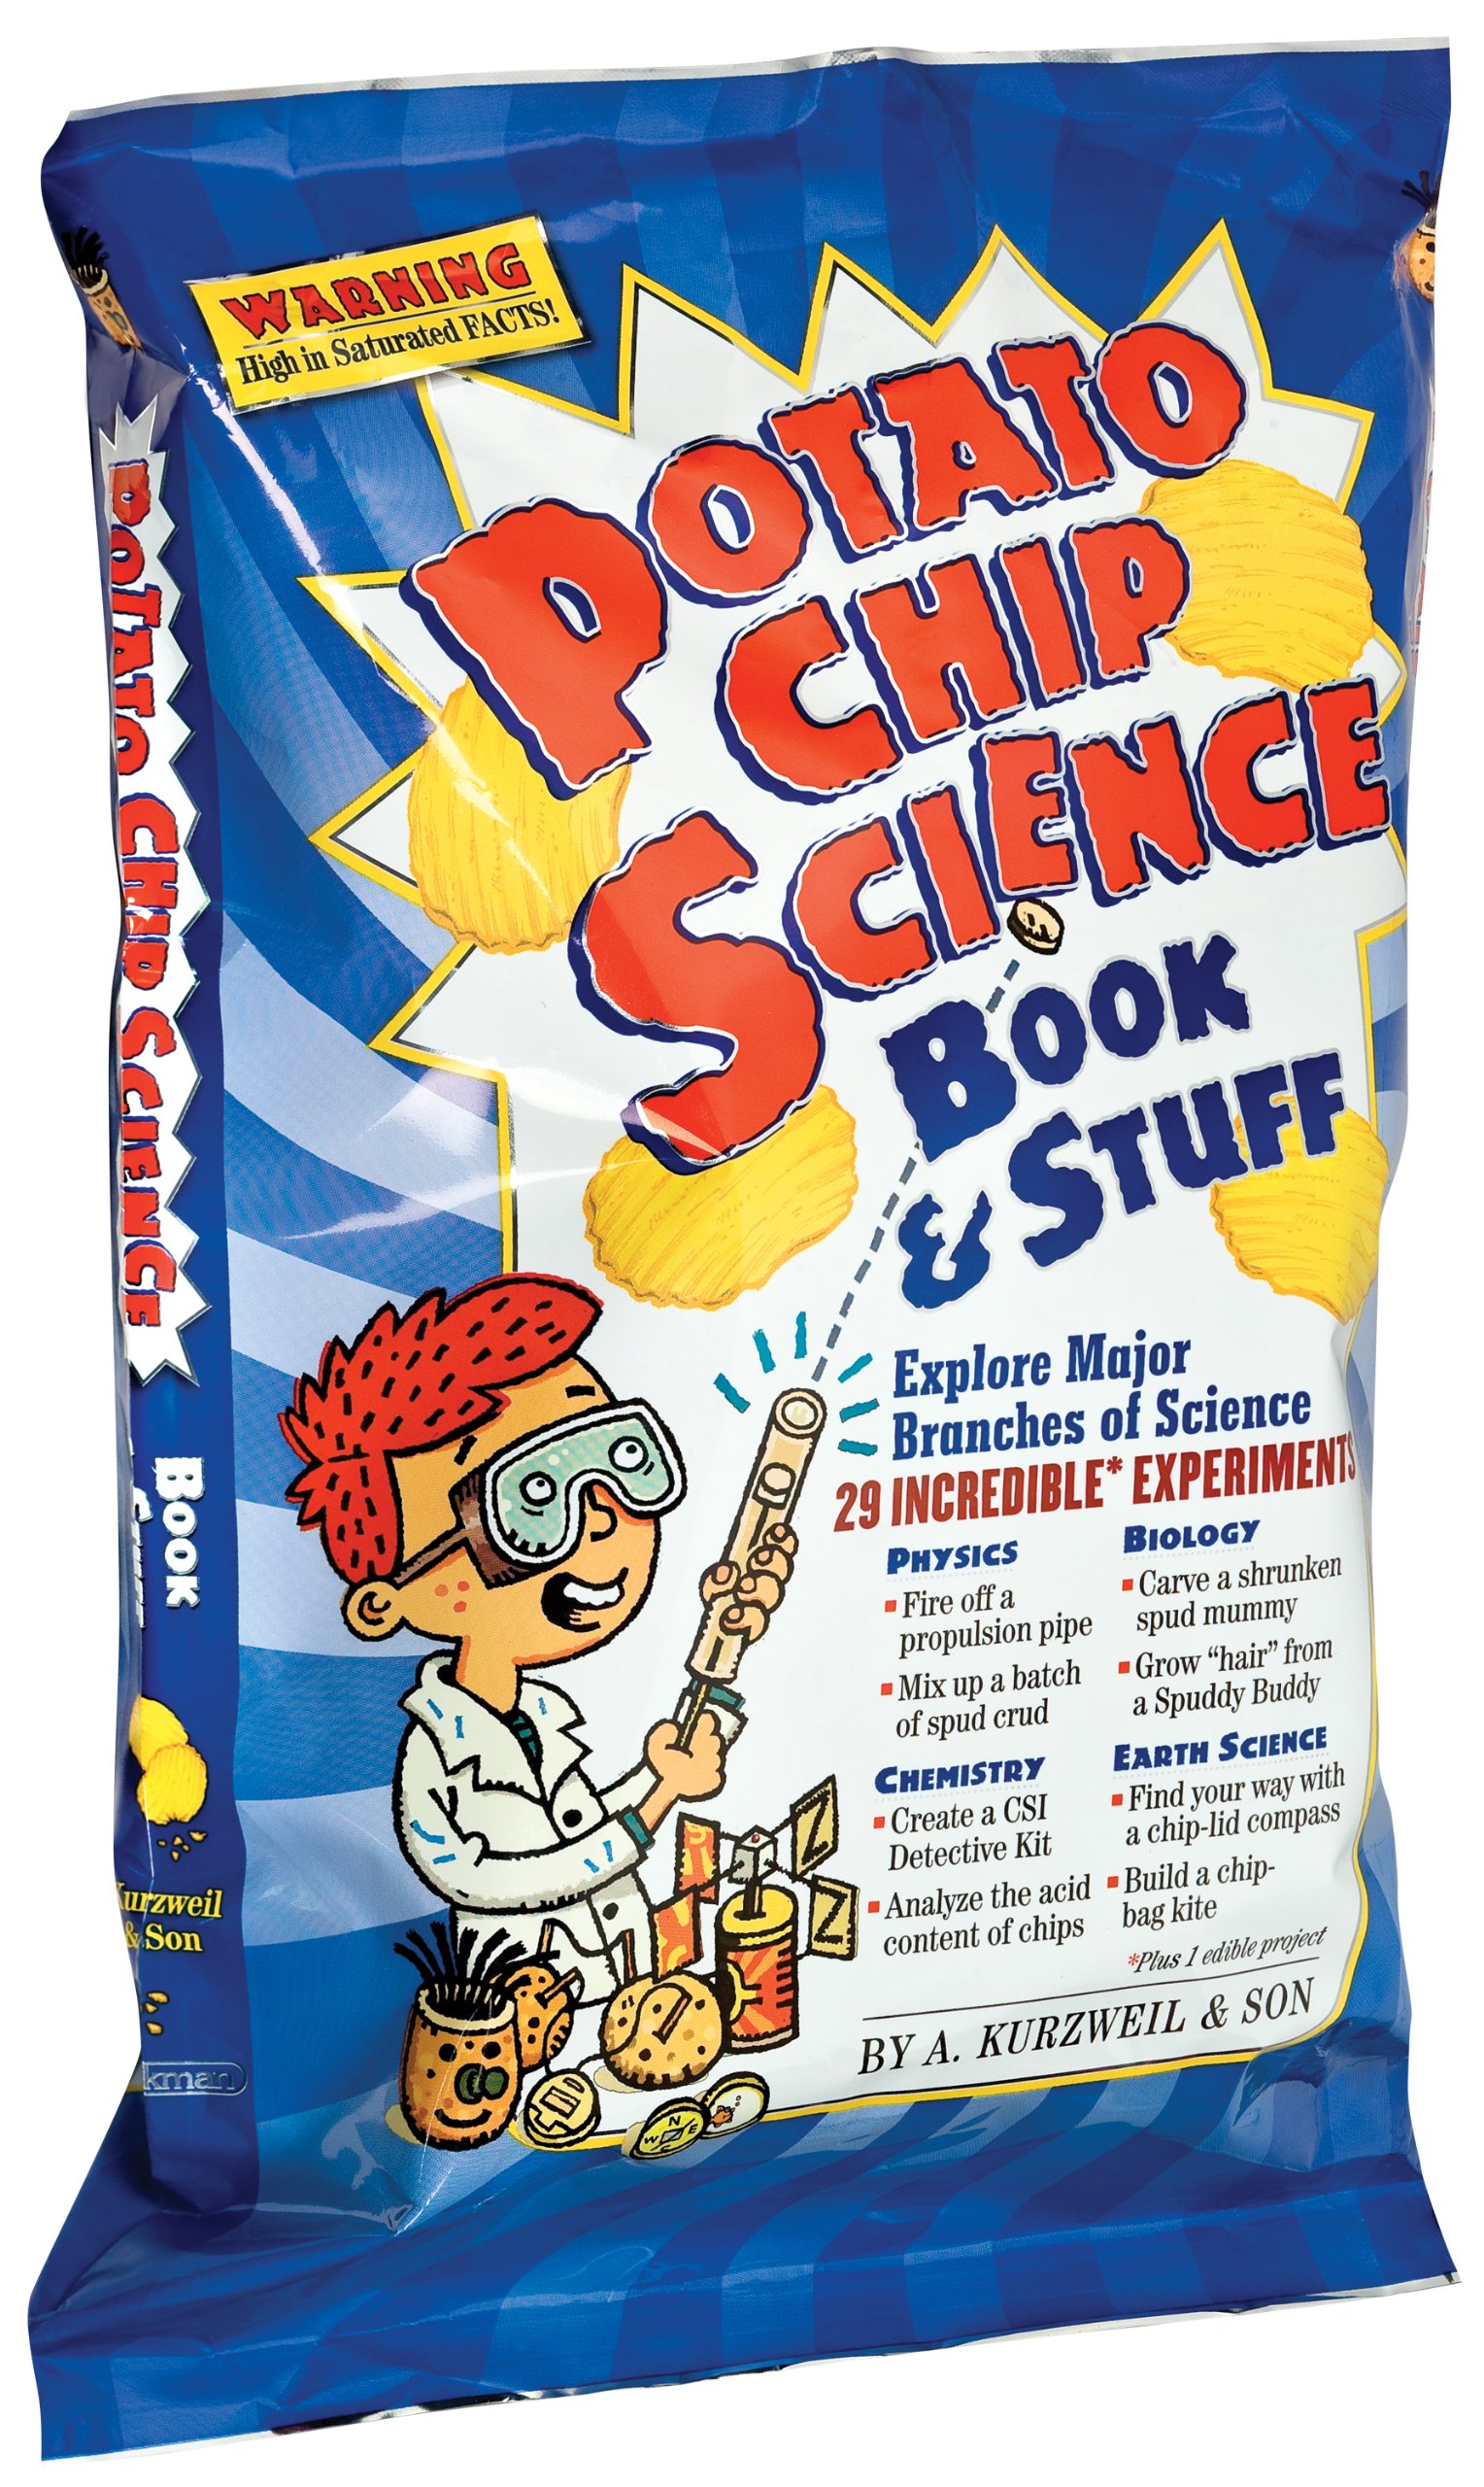 Potato Chip Science: Book and Stuff